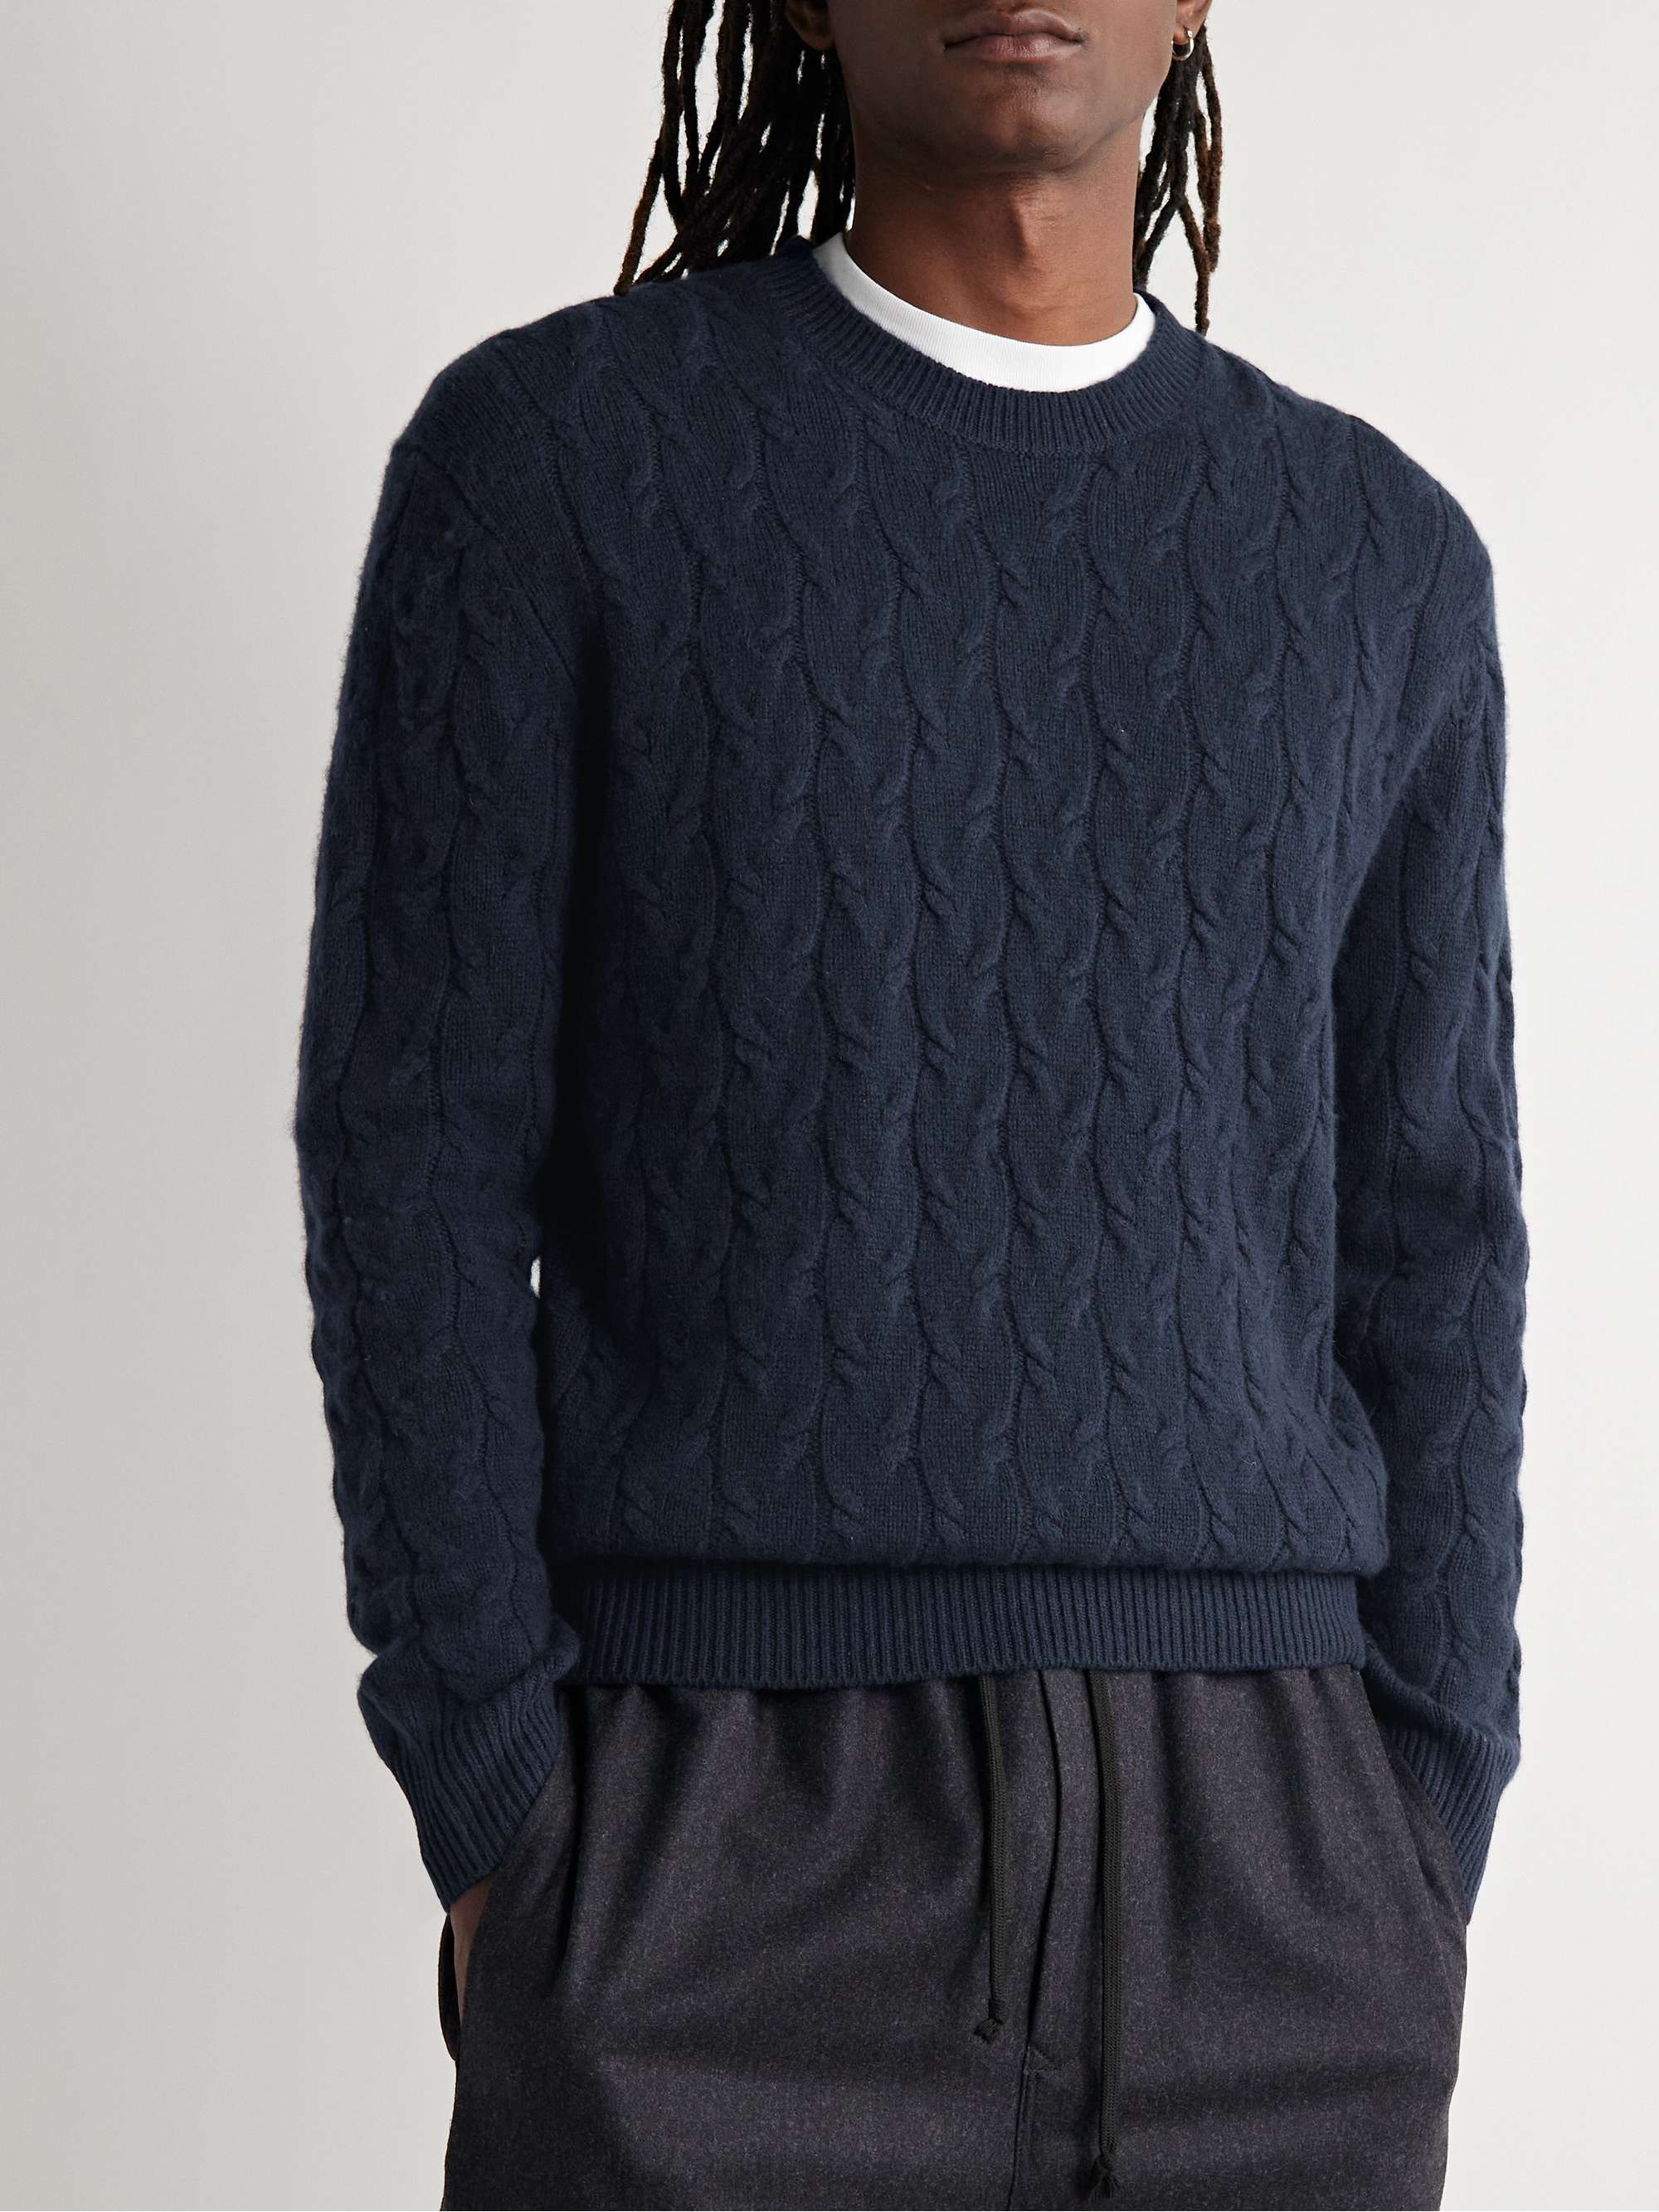 Navy Cable-Knit Cashmere Sweater | CLUB MONACO | MR PORTER